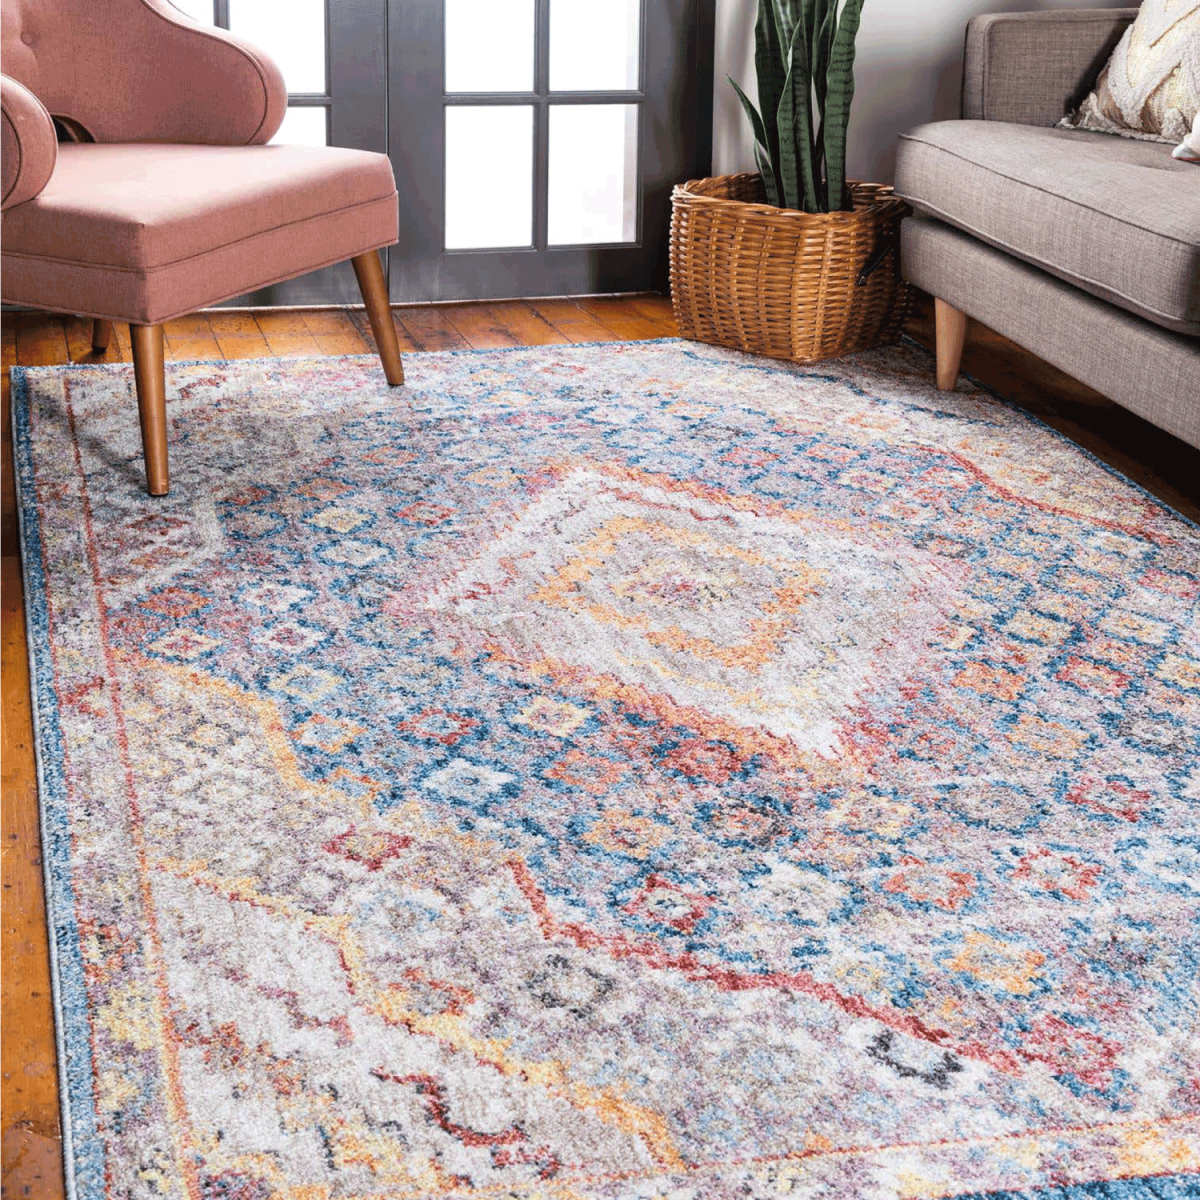 Modern geometric living area rug texture design